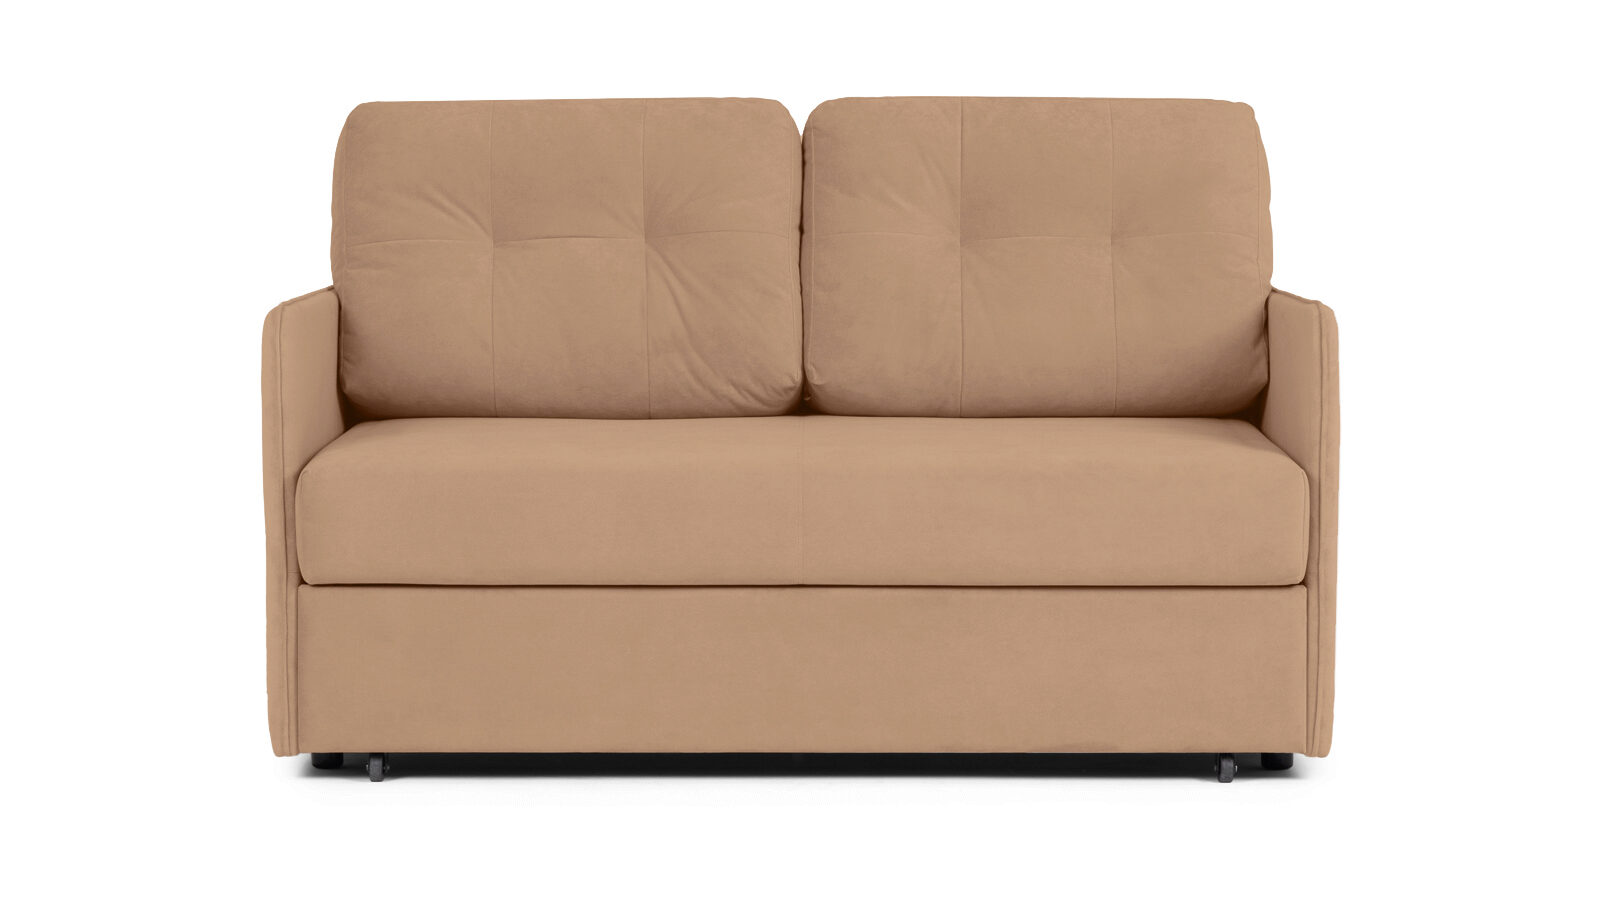 прямой диван loko mini c широкими подлокотниками Прямой диван Loko MINI с узкими подлокотниками